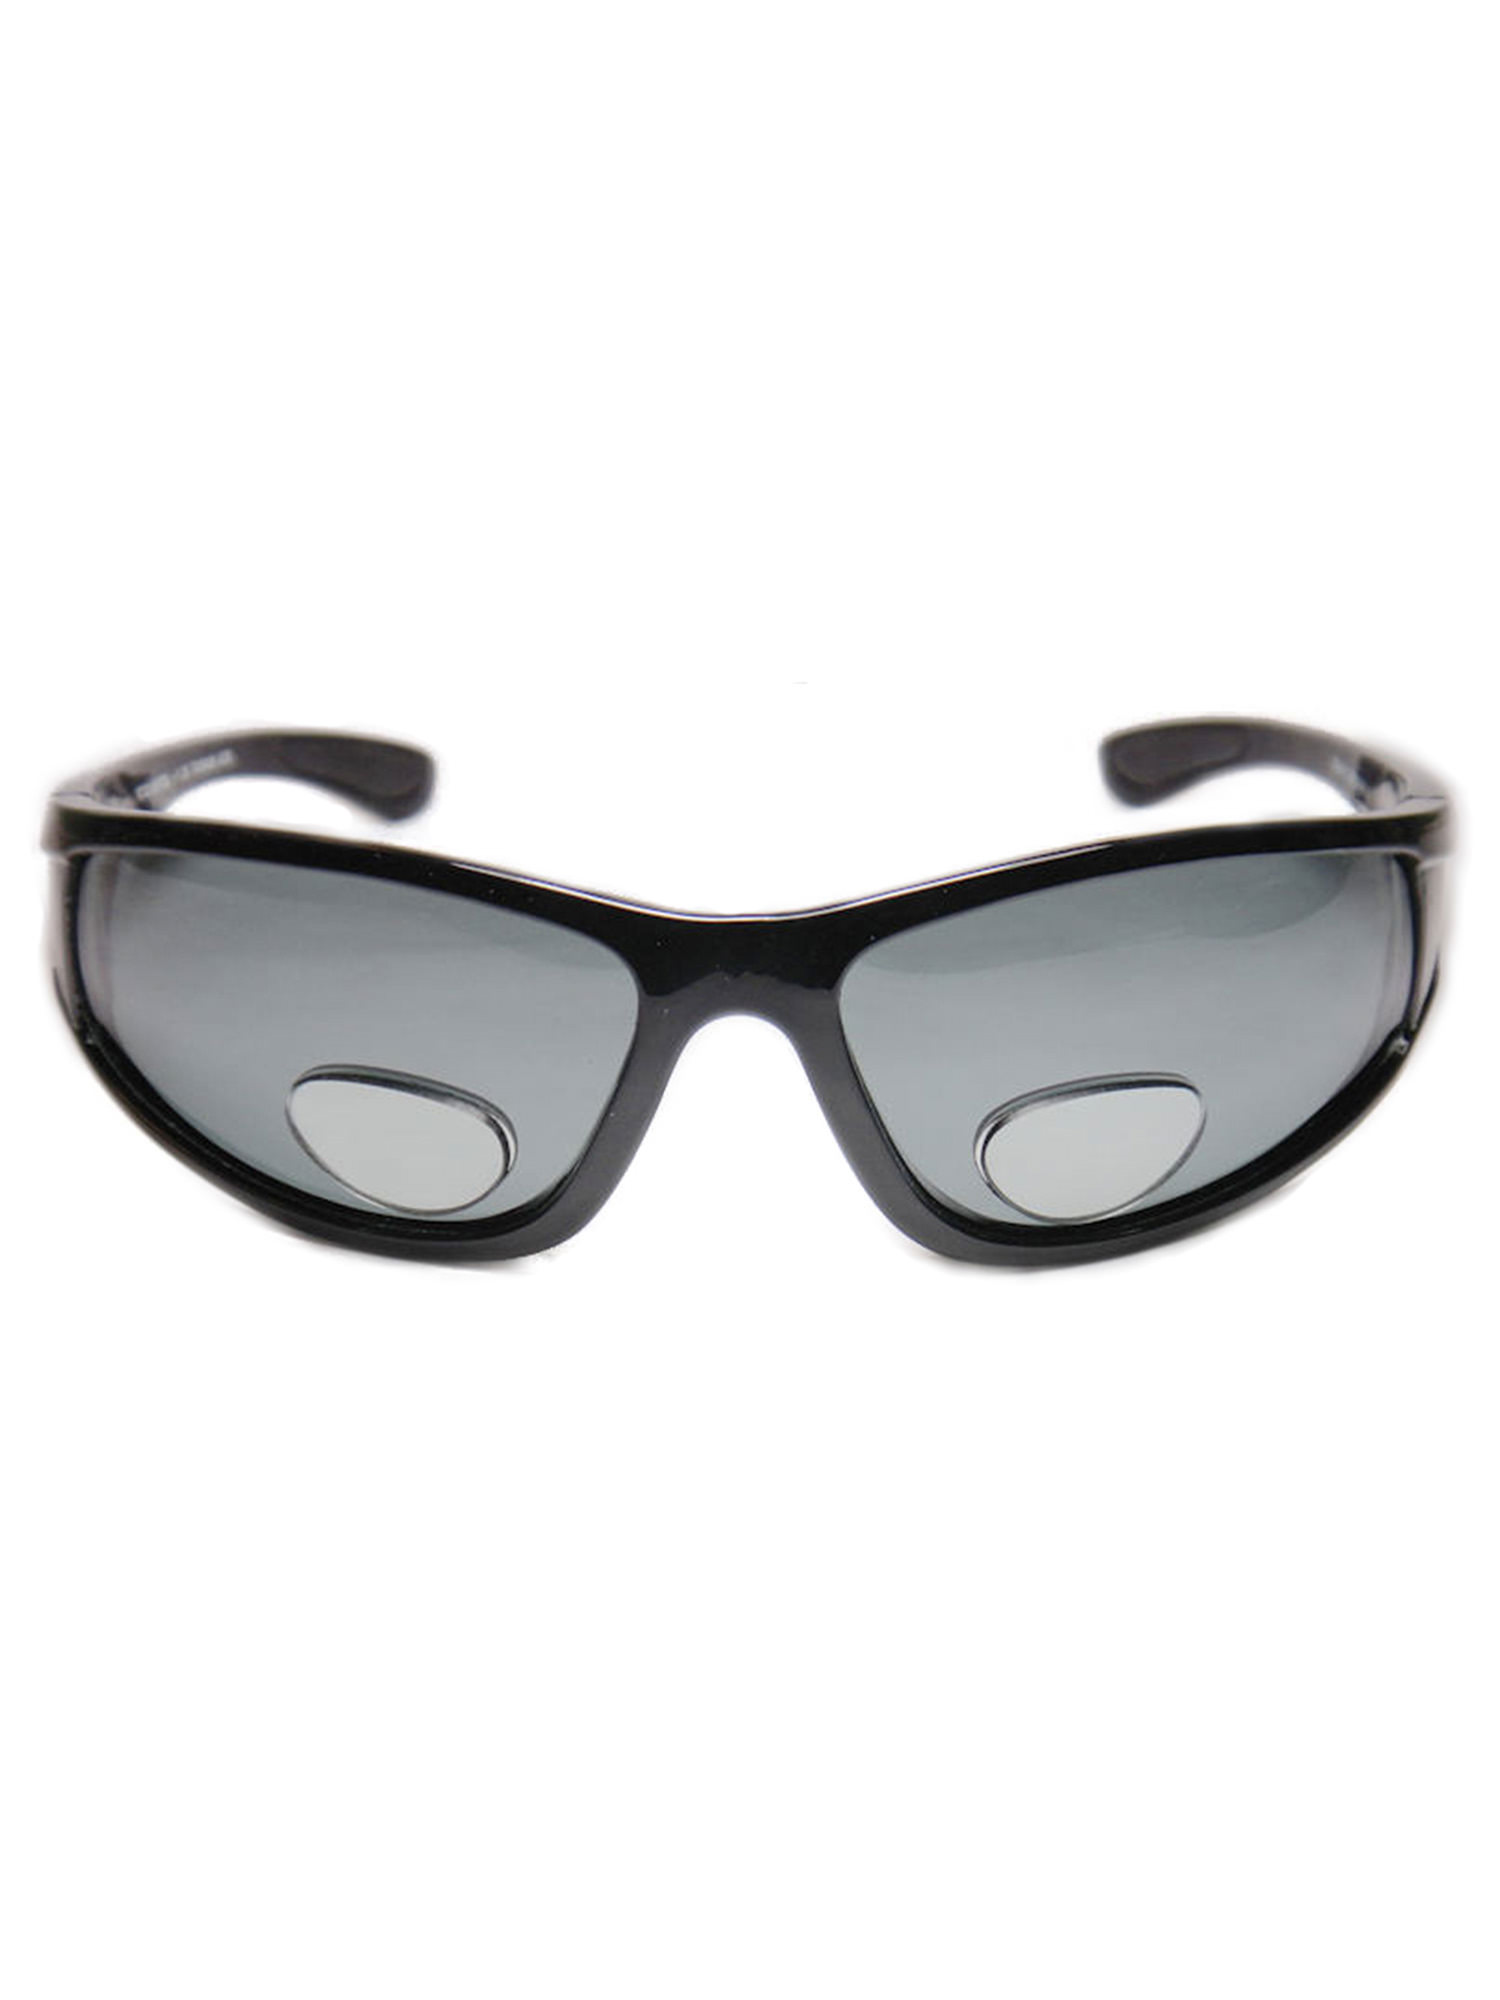 Glasslane Mens Sports Sunglasses Polarized Wrap Around Bifocal Lens Fly Fishing&nbsp;BLACK +2.00 - image 2 of 2